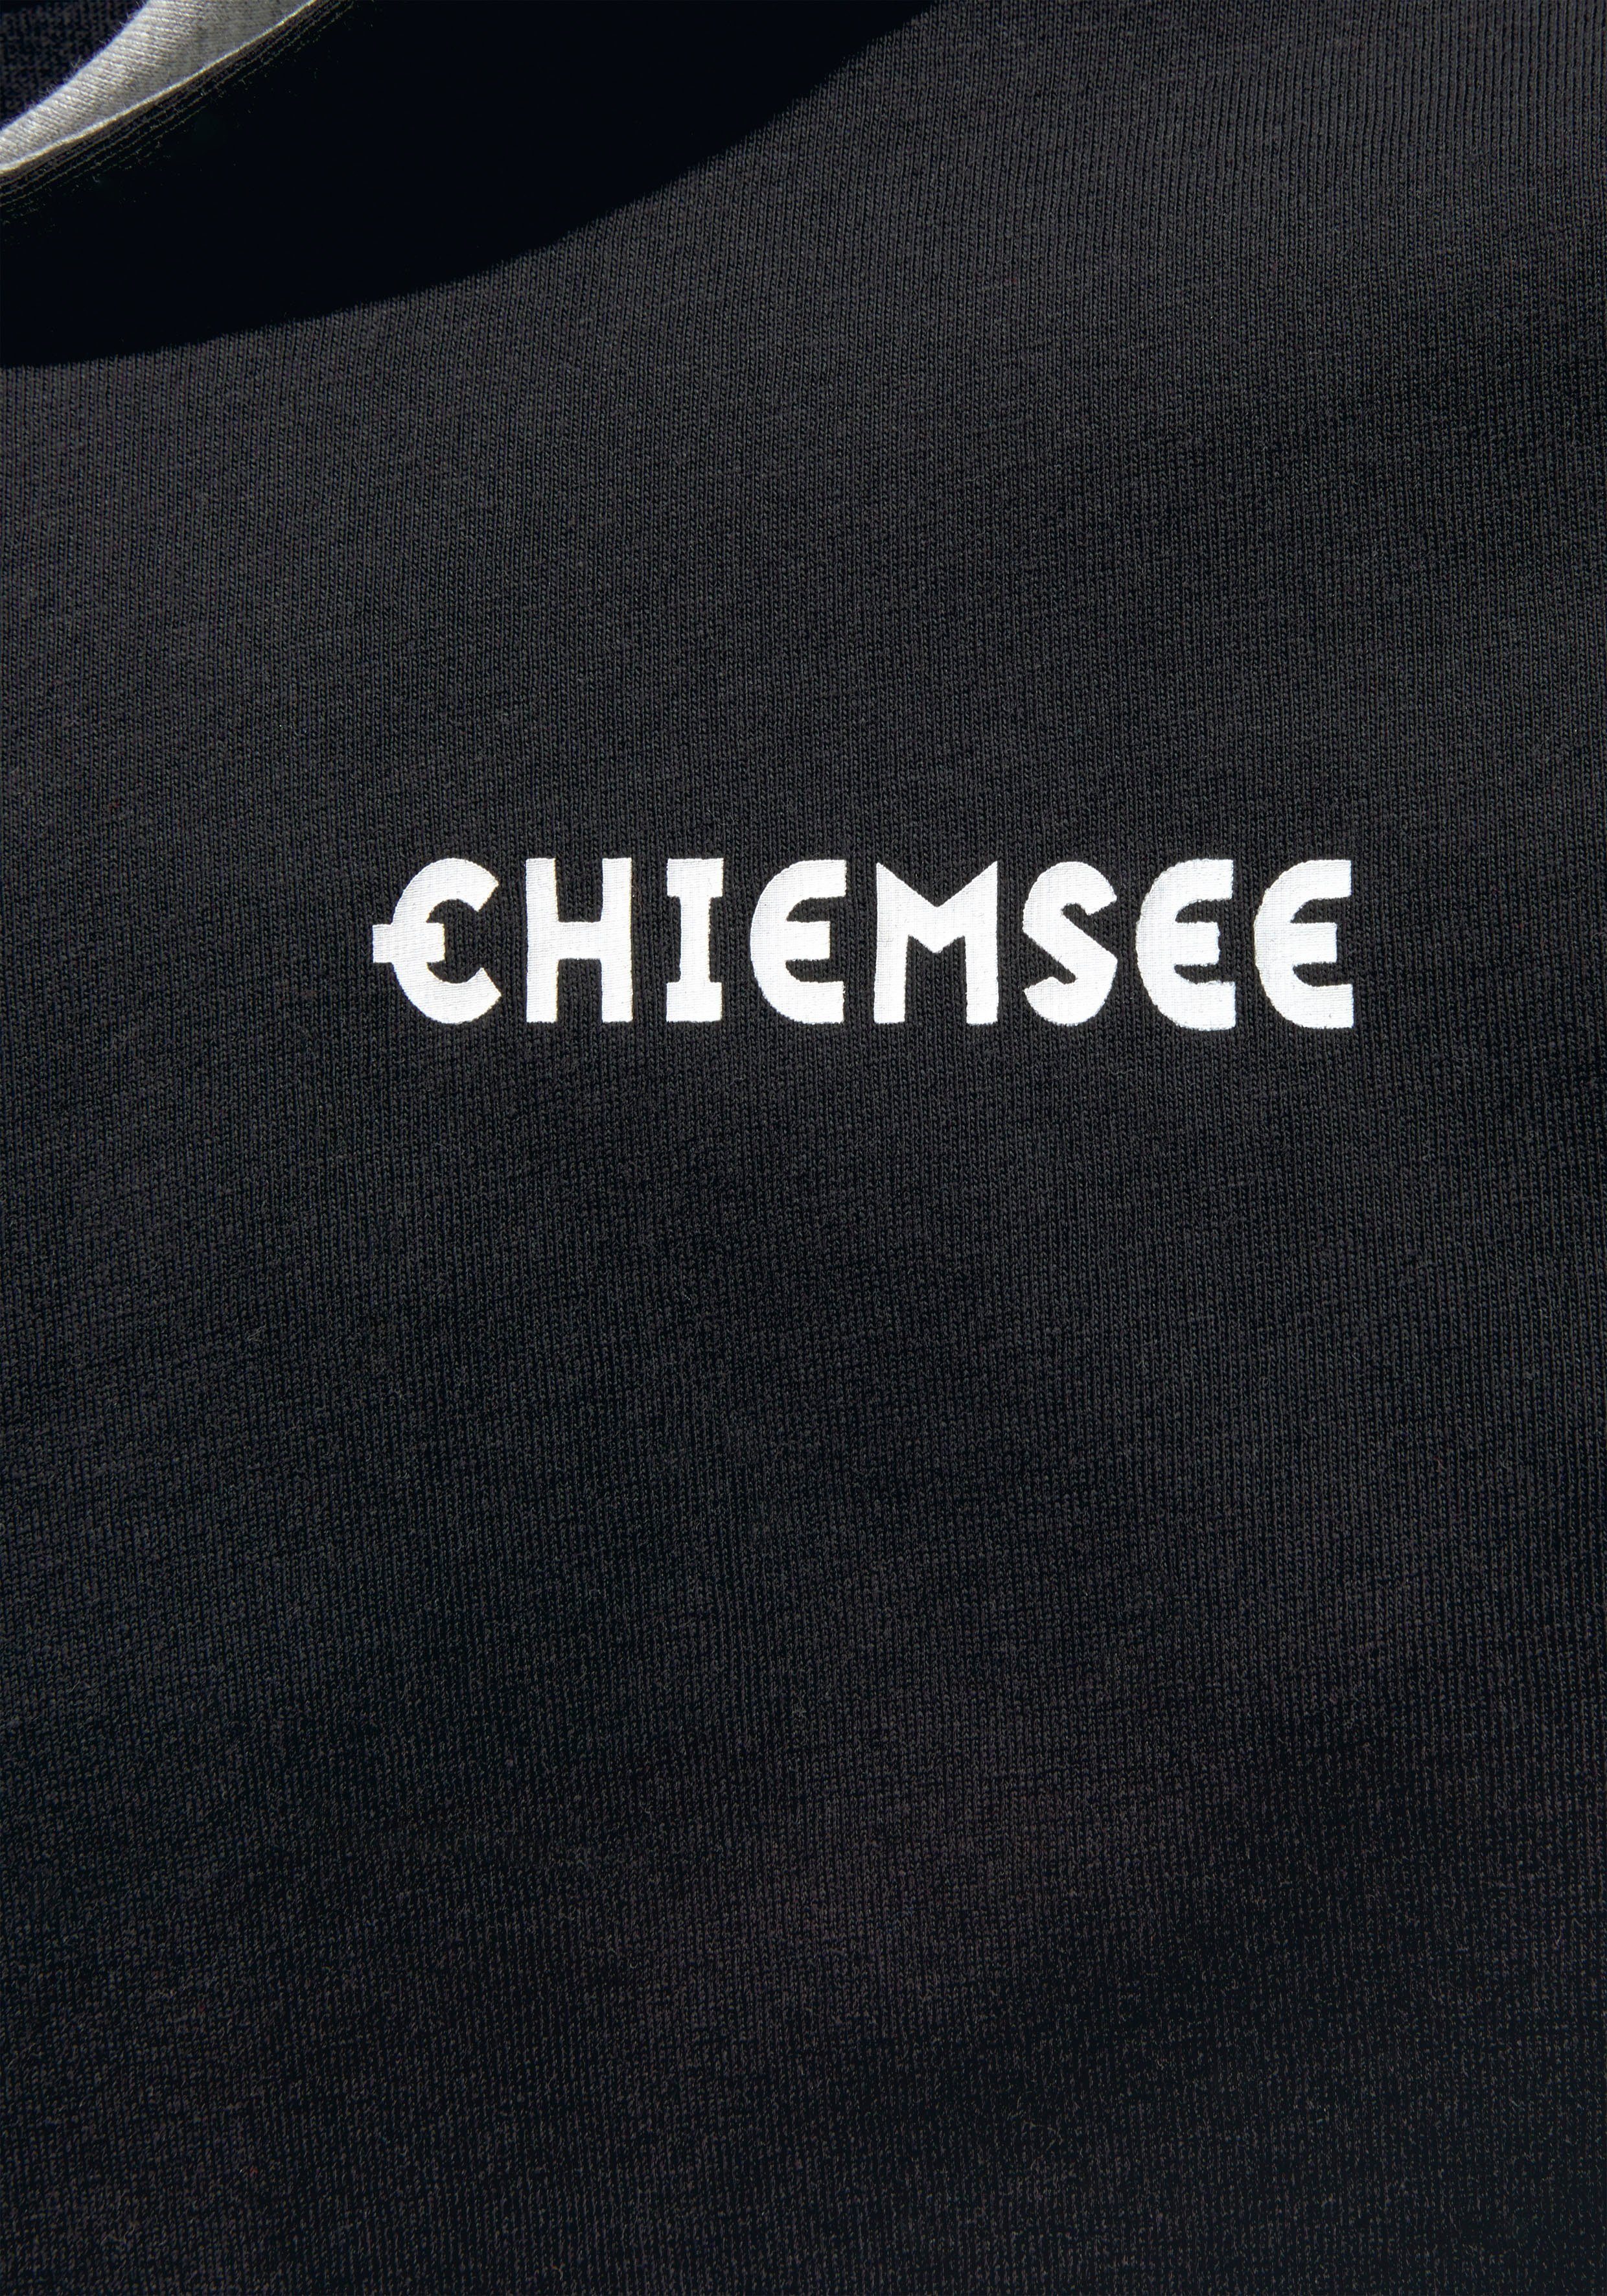 Chiemsee Kapuzenshirt mit Kapuzendruck und Rückenprint